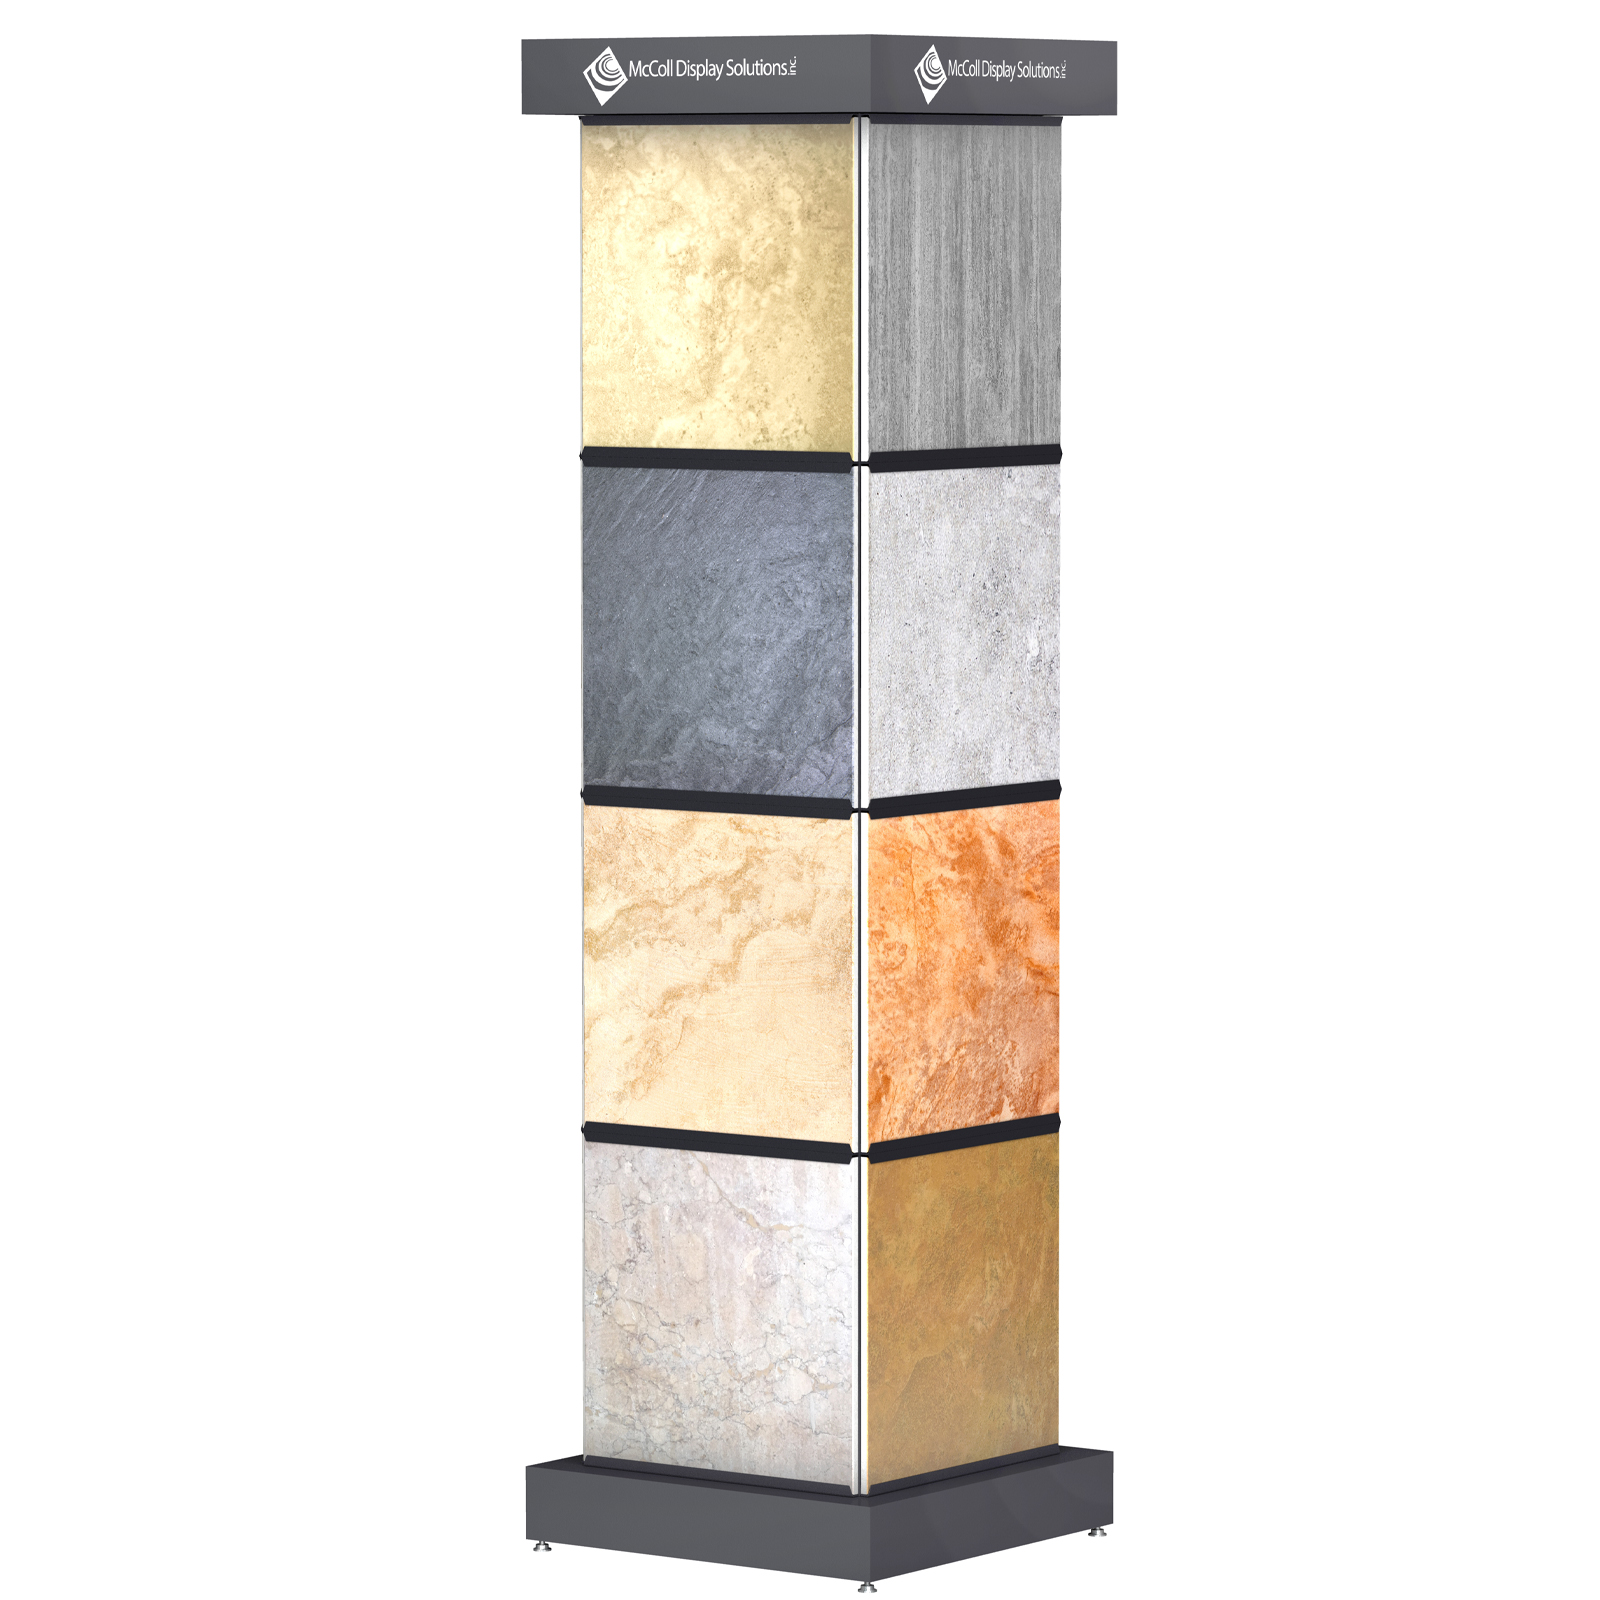 CD66 Showroom Display Tower Channel System for Ceramic Tiles Marble Stone Granite Quartz Travertine Samples